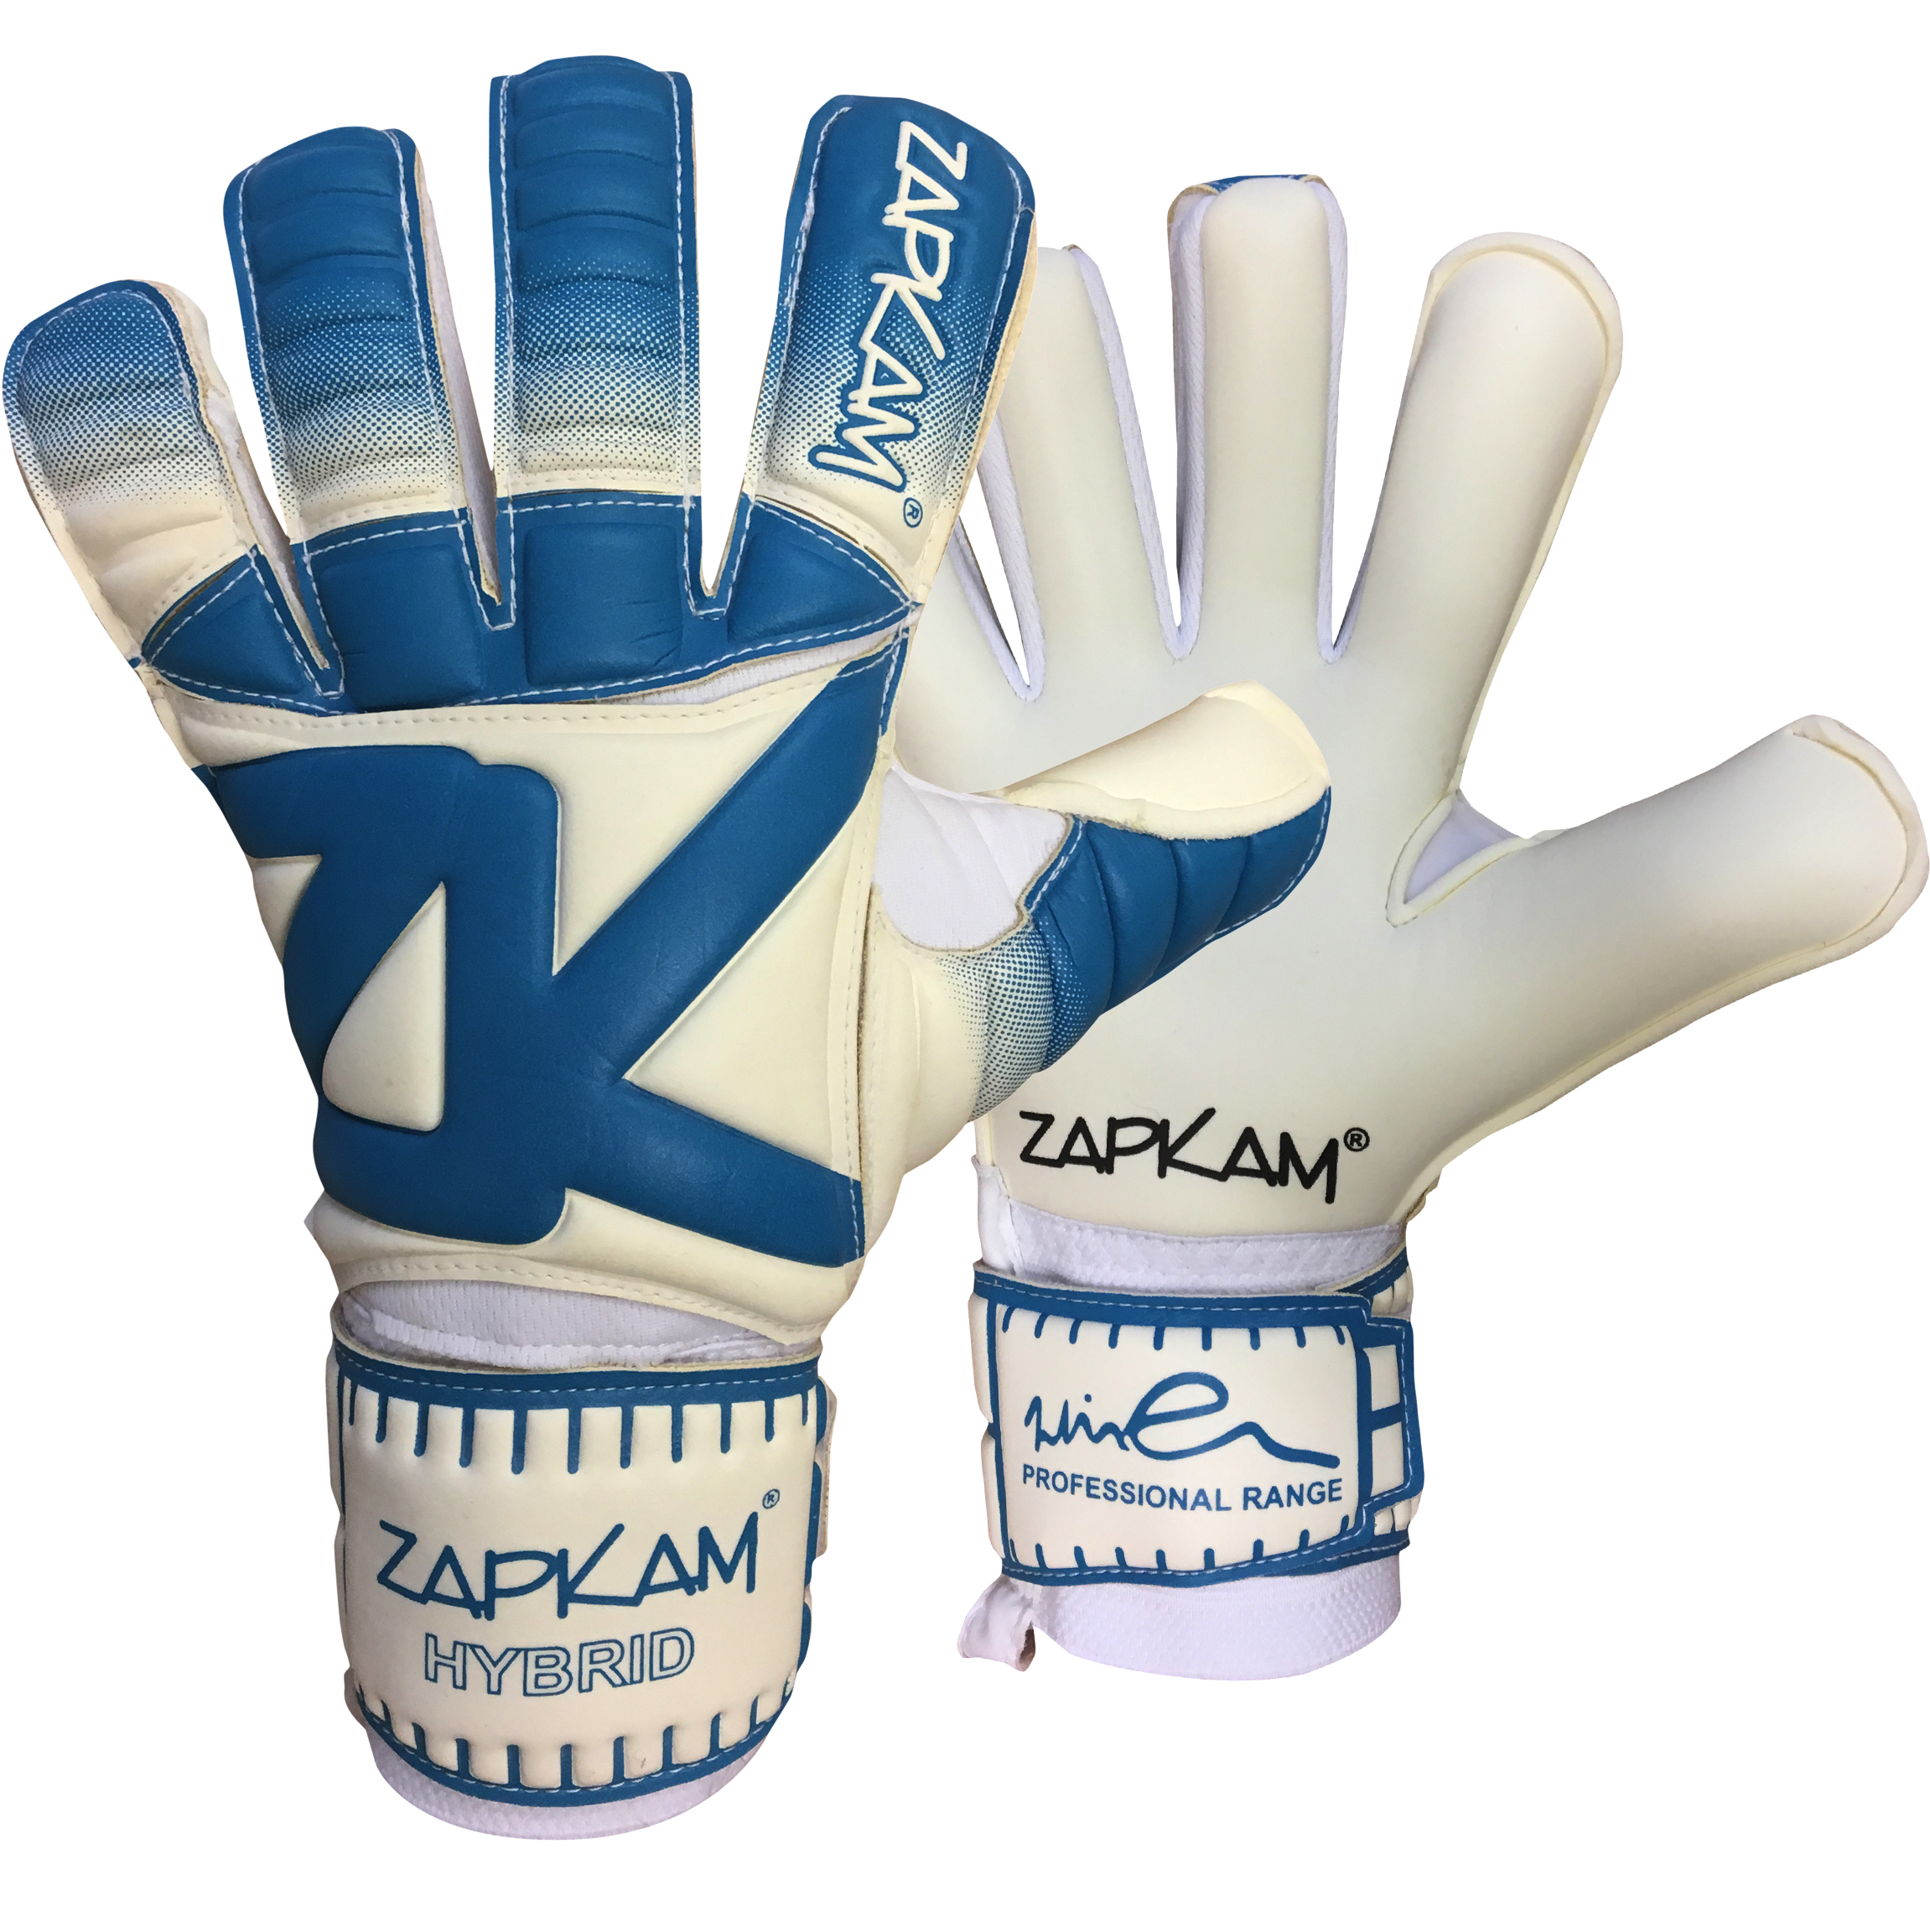 https://files.zapkambeta.com/media/747179/04-hybrid-cut-goalkeeper-gloves-1.jpg